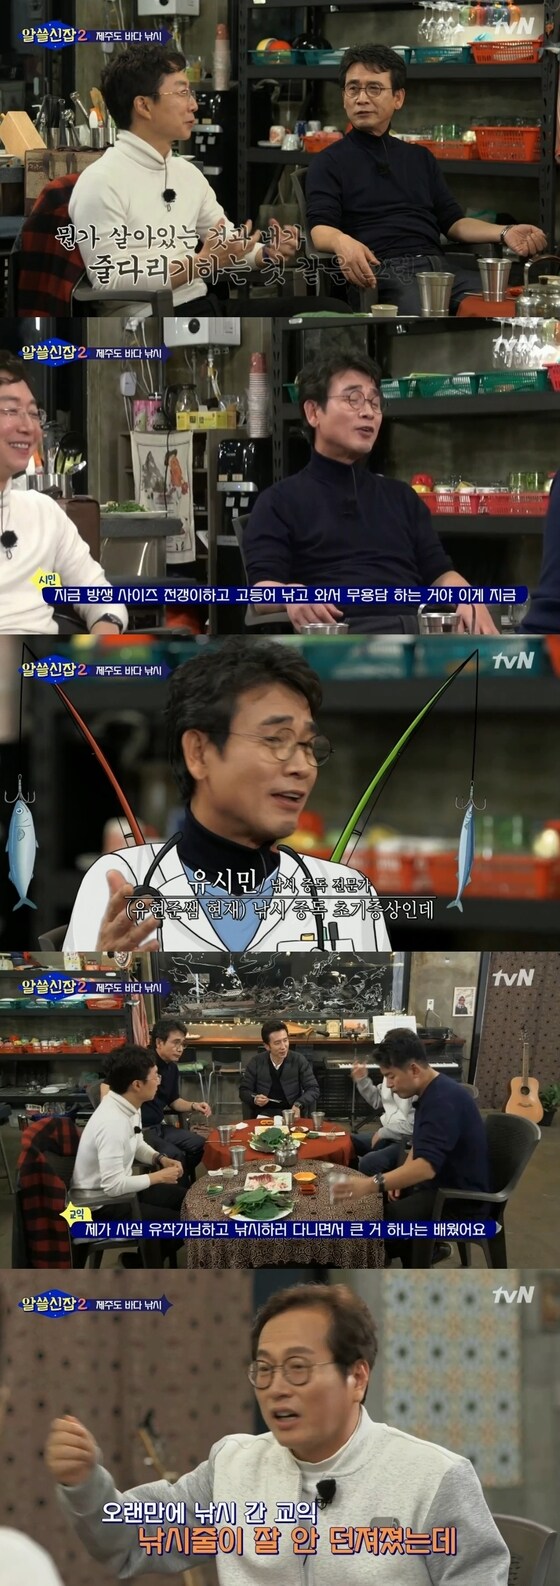 tvN '알쓸신잡2' 캡처© News1